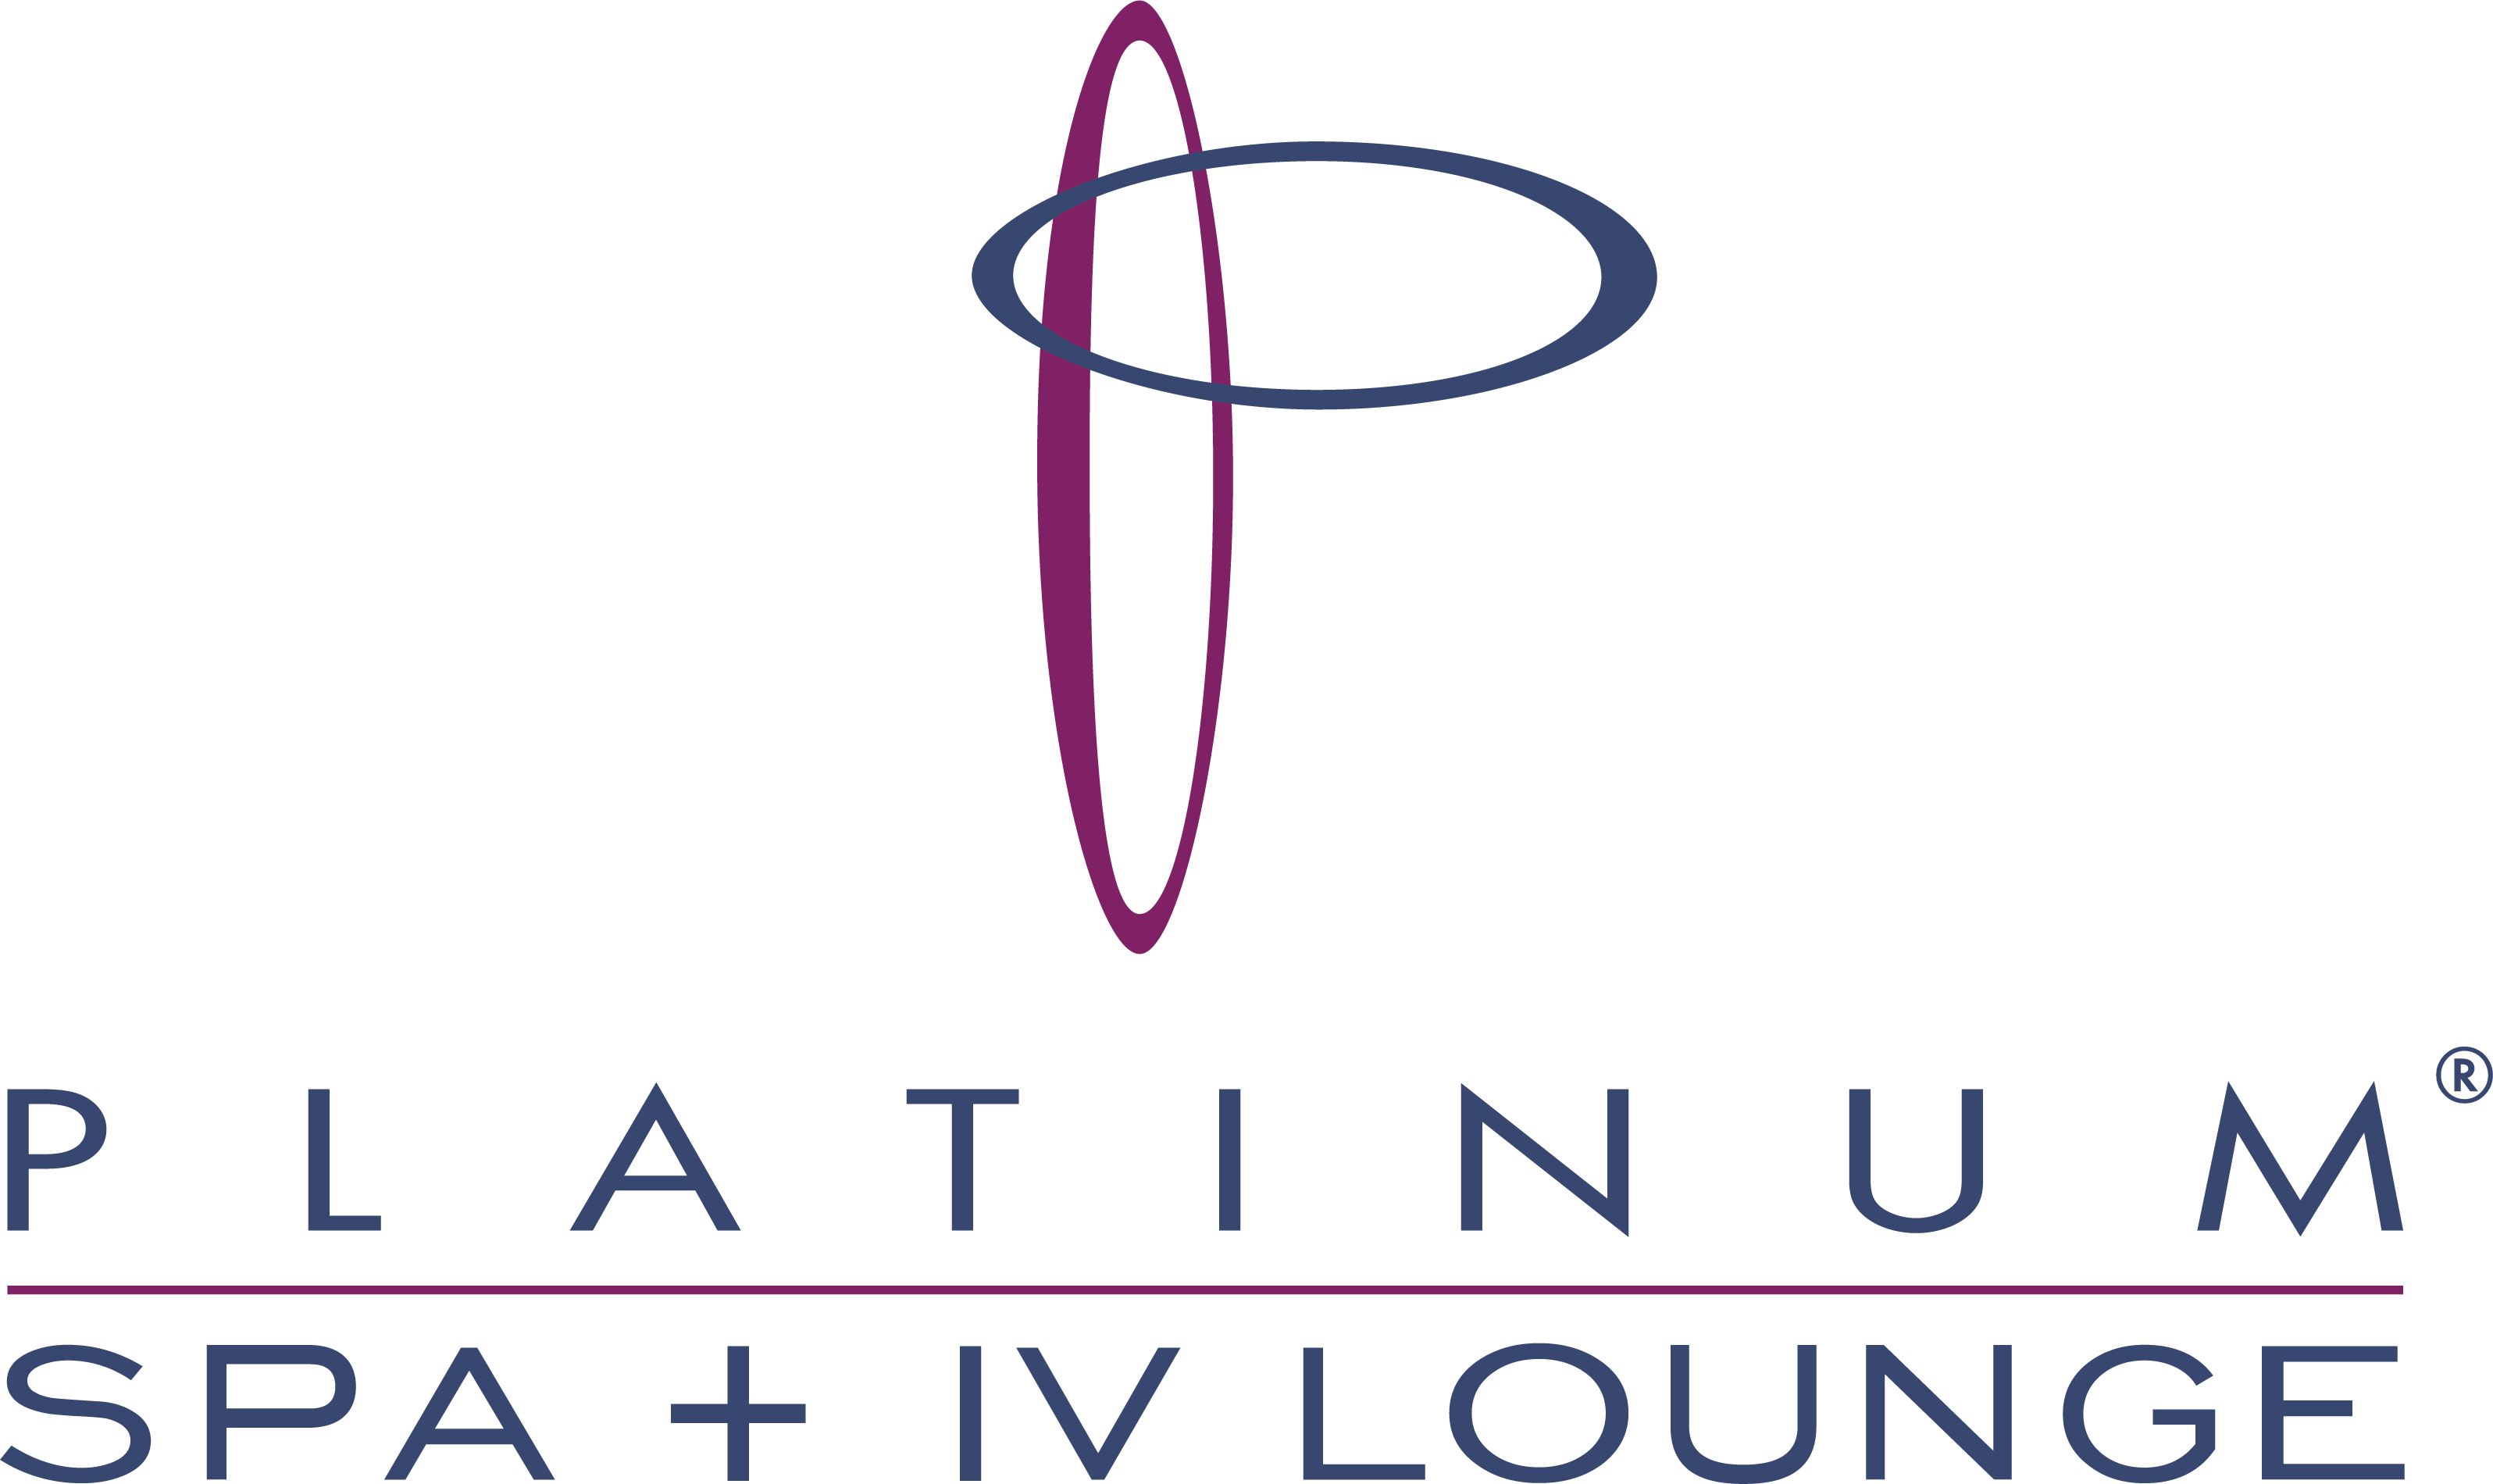 Platinum Spa + IV Lounge